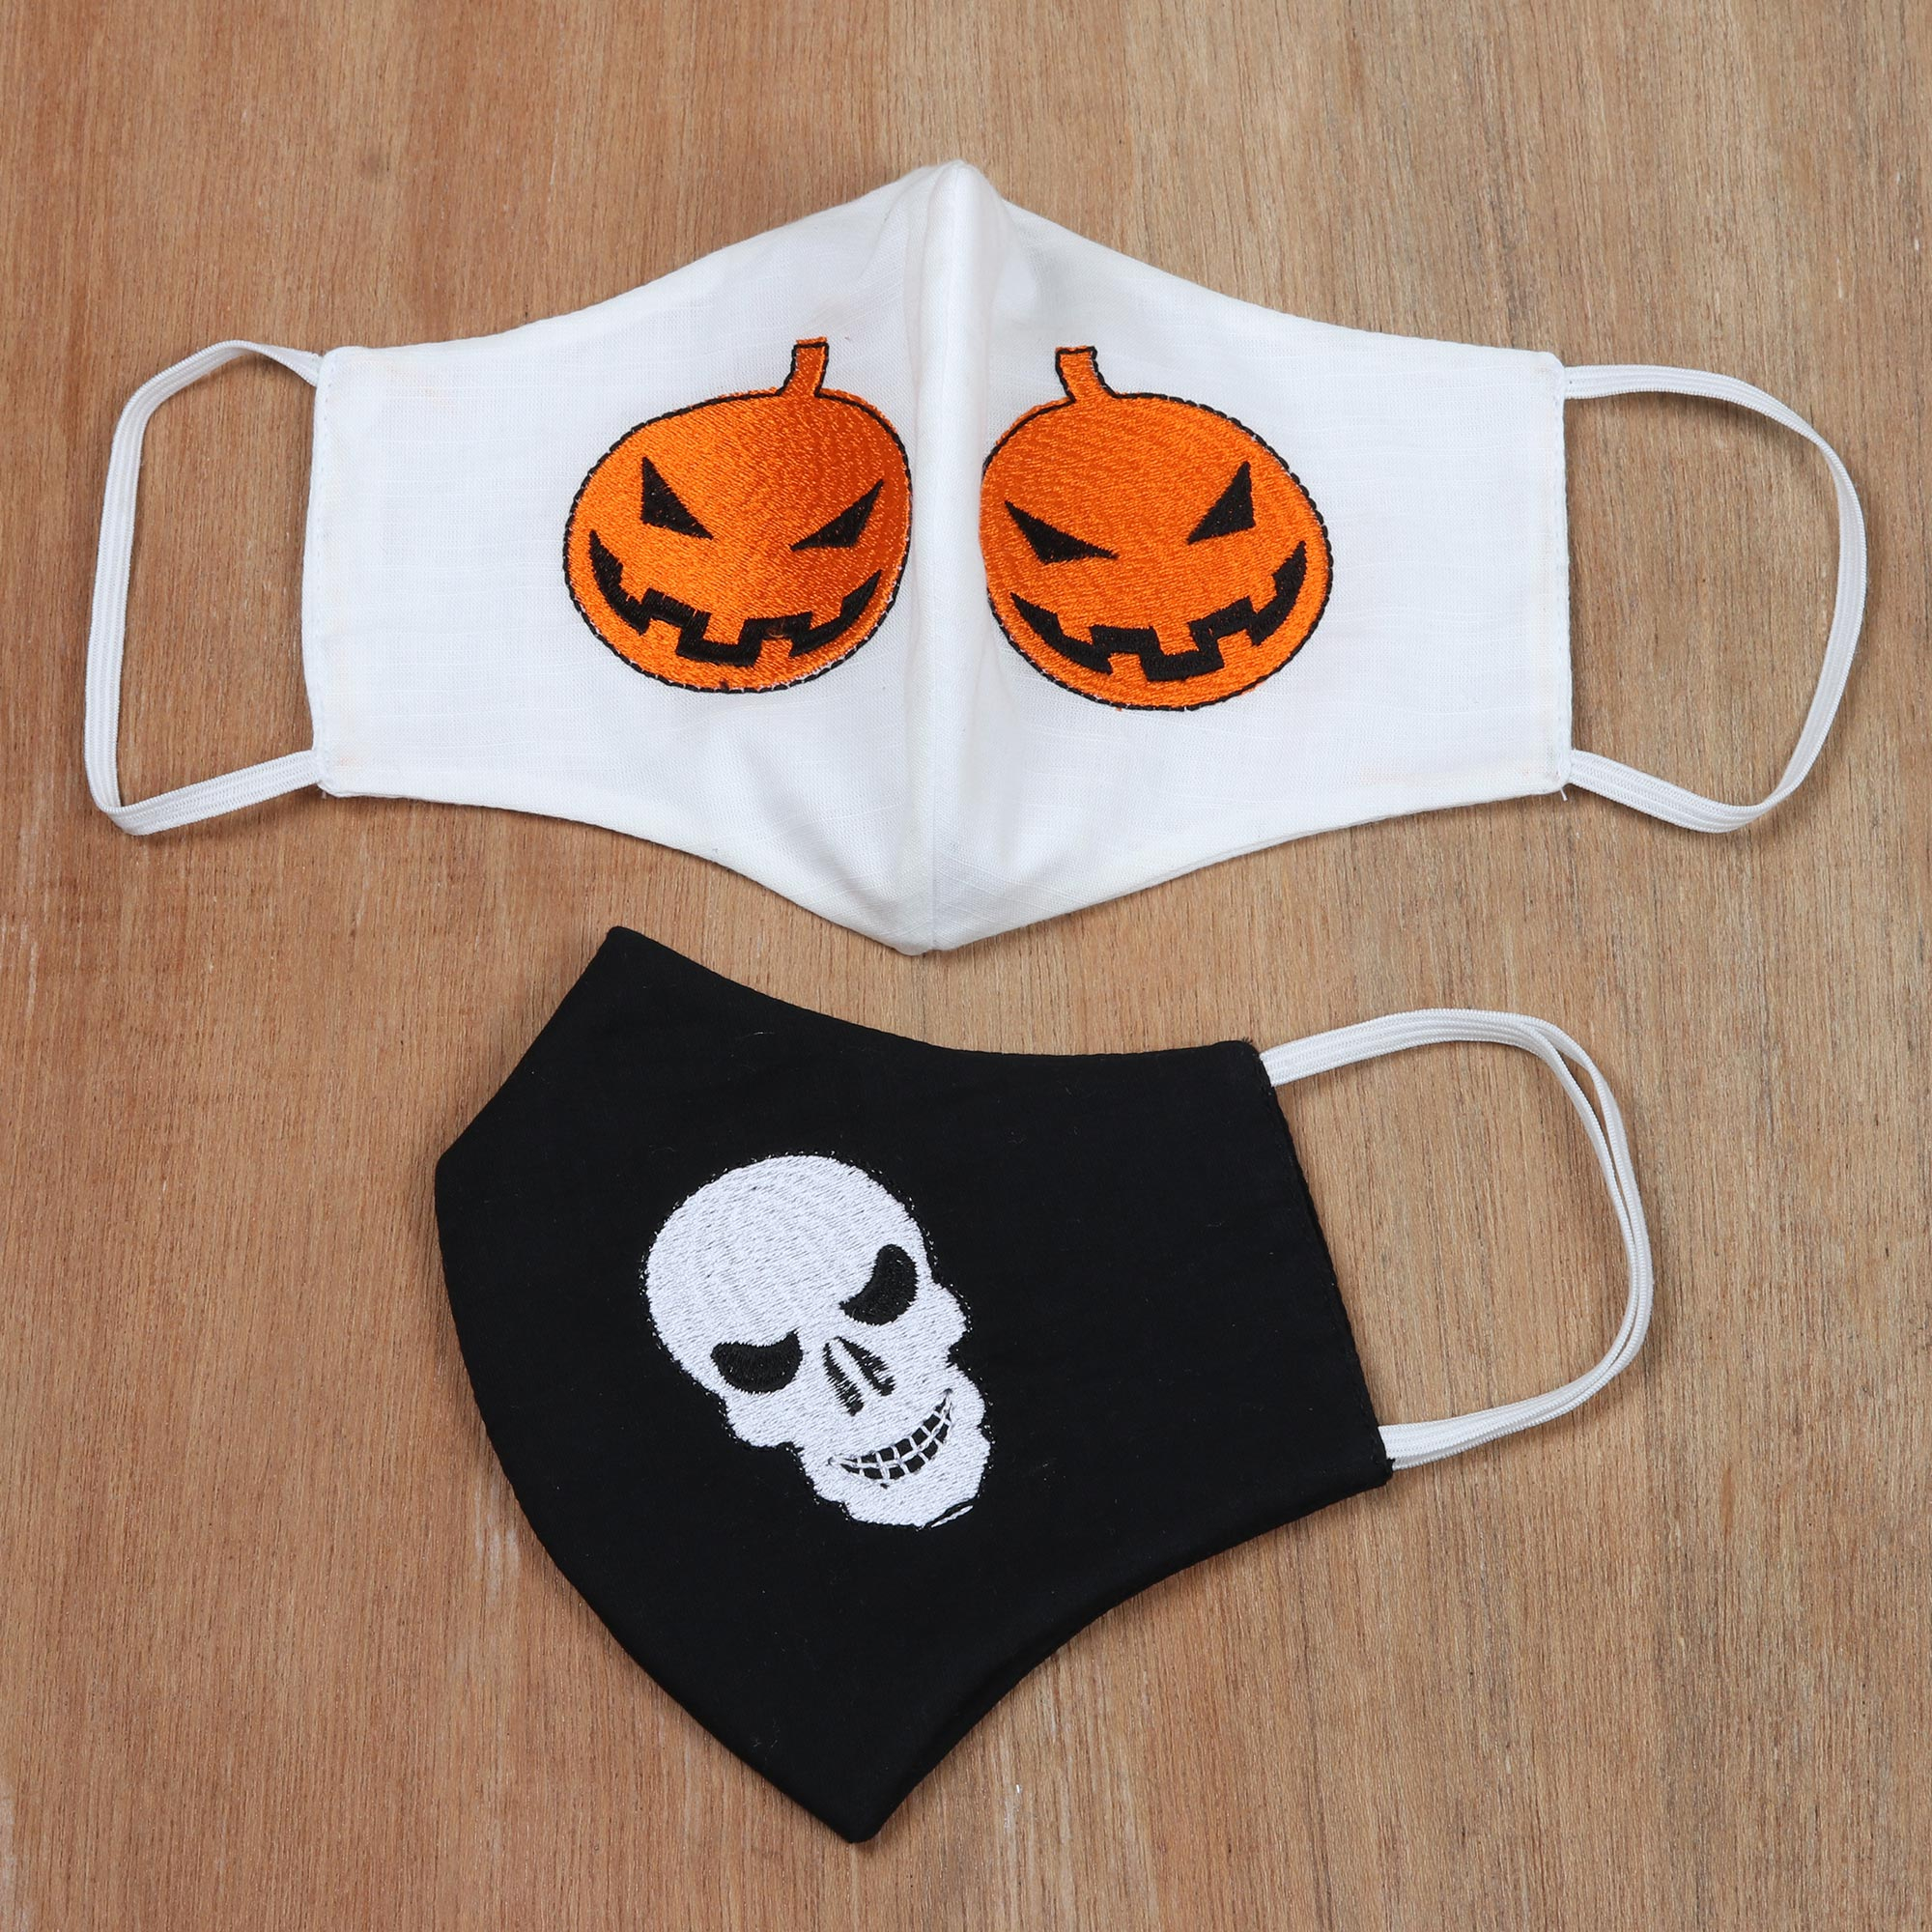 Spooky Halloween Pair of Reusable Face Masks - Spooky Halloween | NOVICA